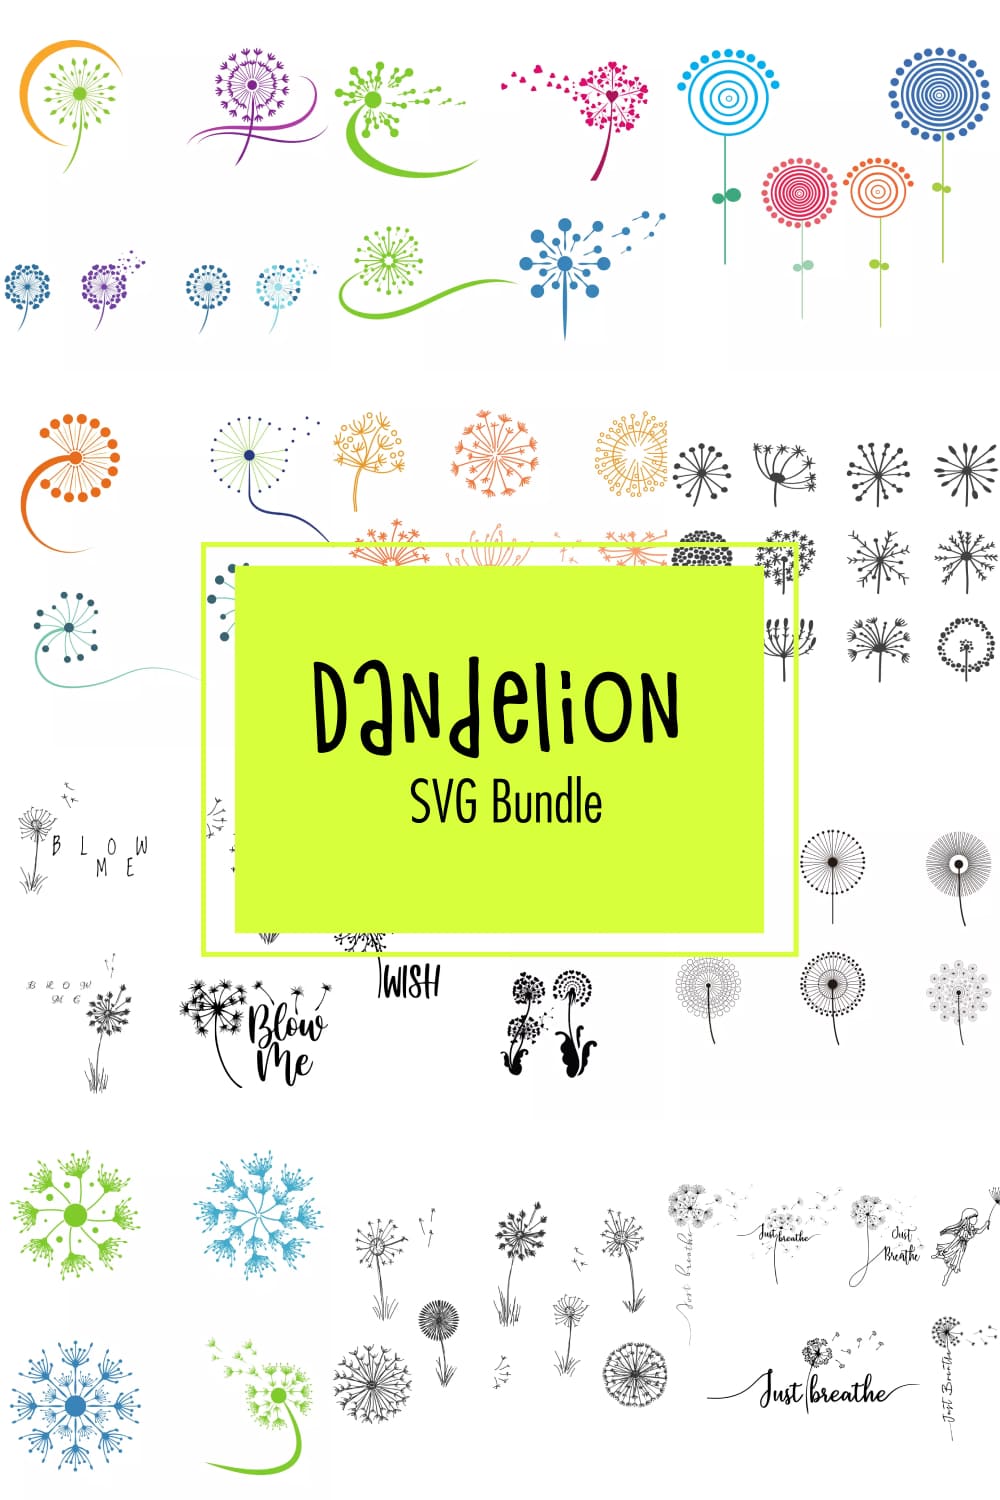 Dandelion svg bundle, picture for Pinterest.